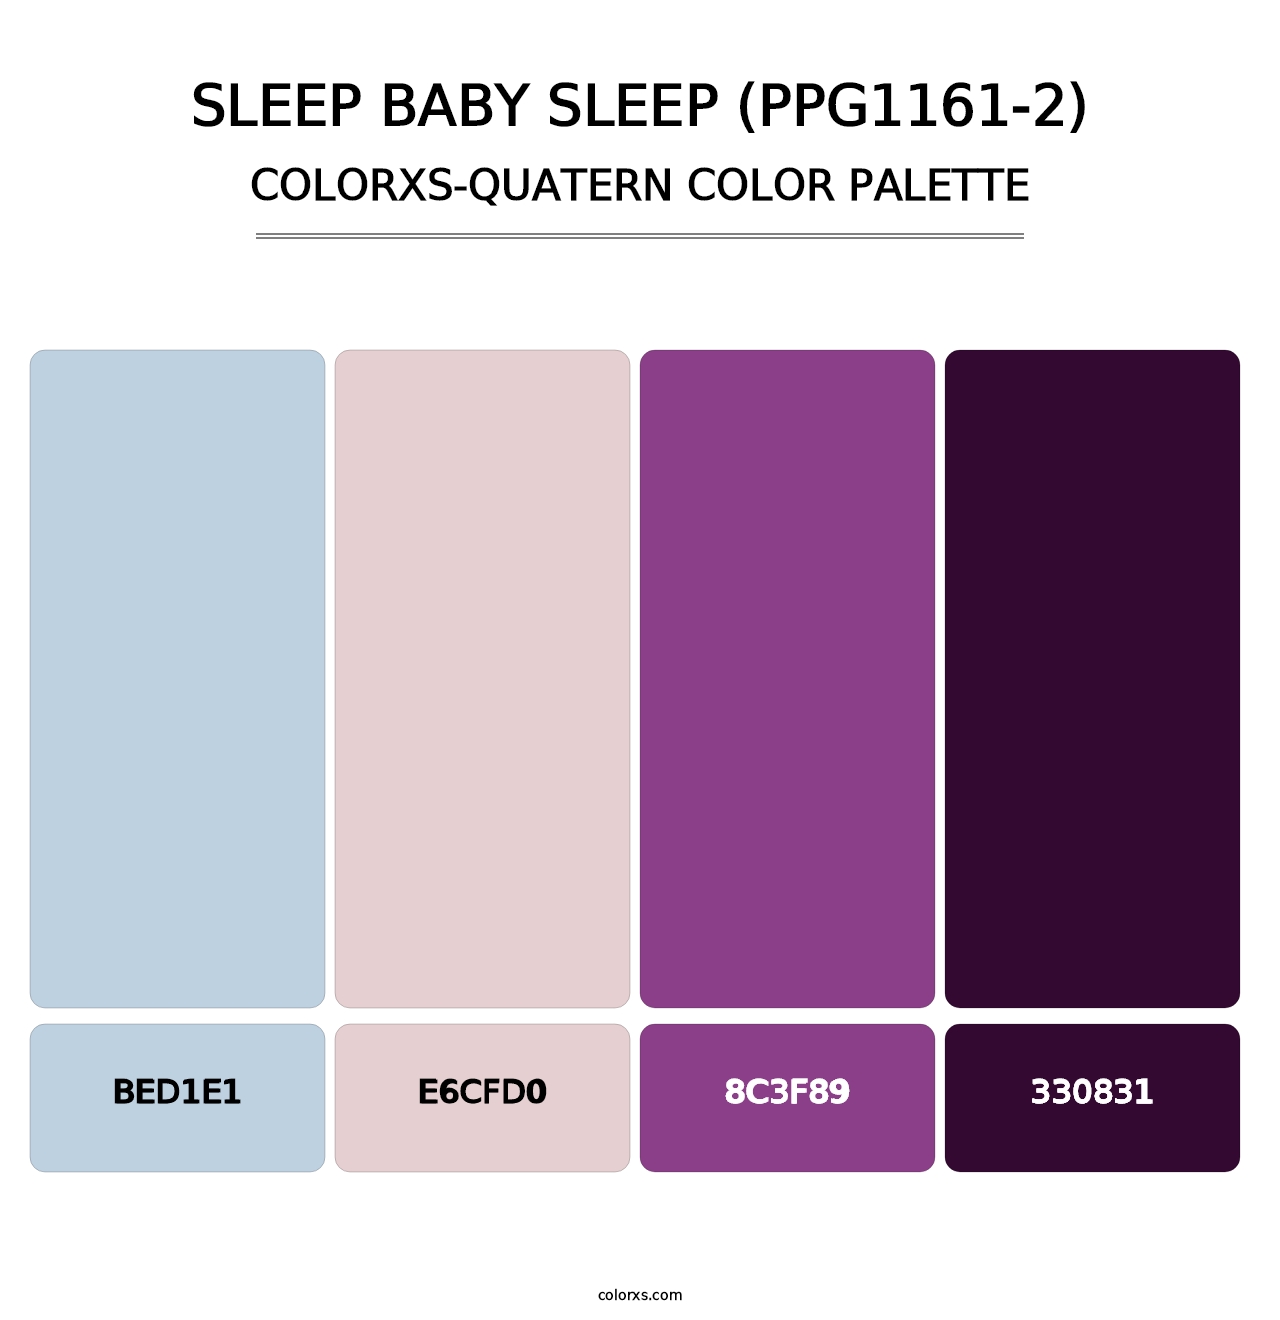 Sleep Baby Sleep (PPG1161-2) - Colorxs Quatern Palette